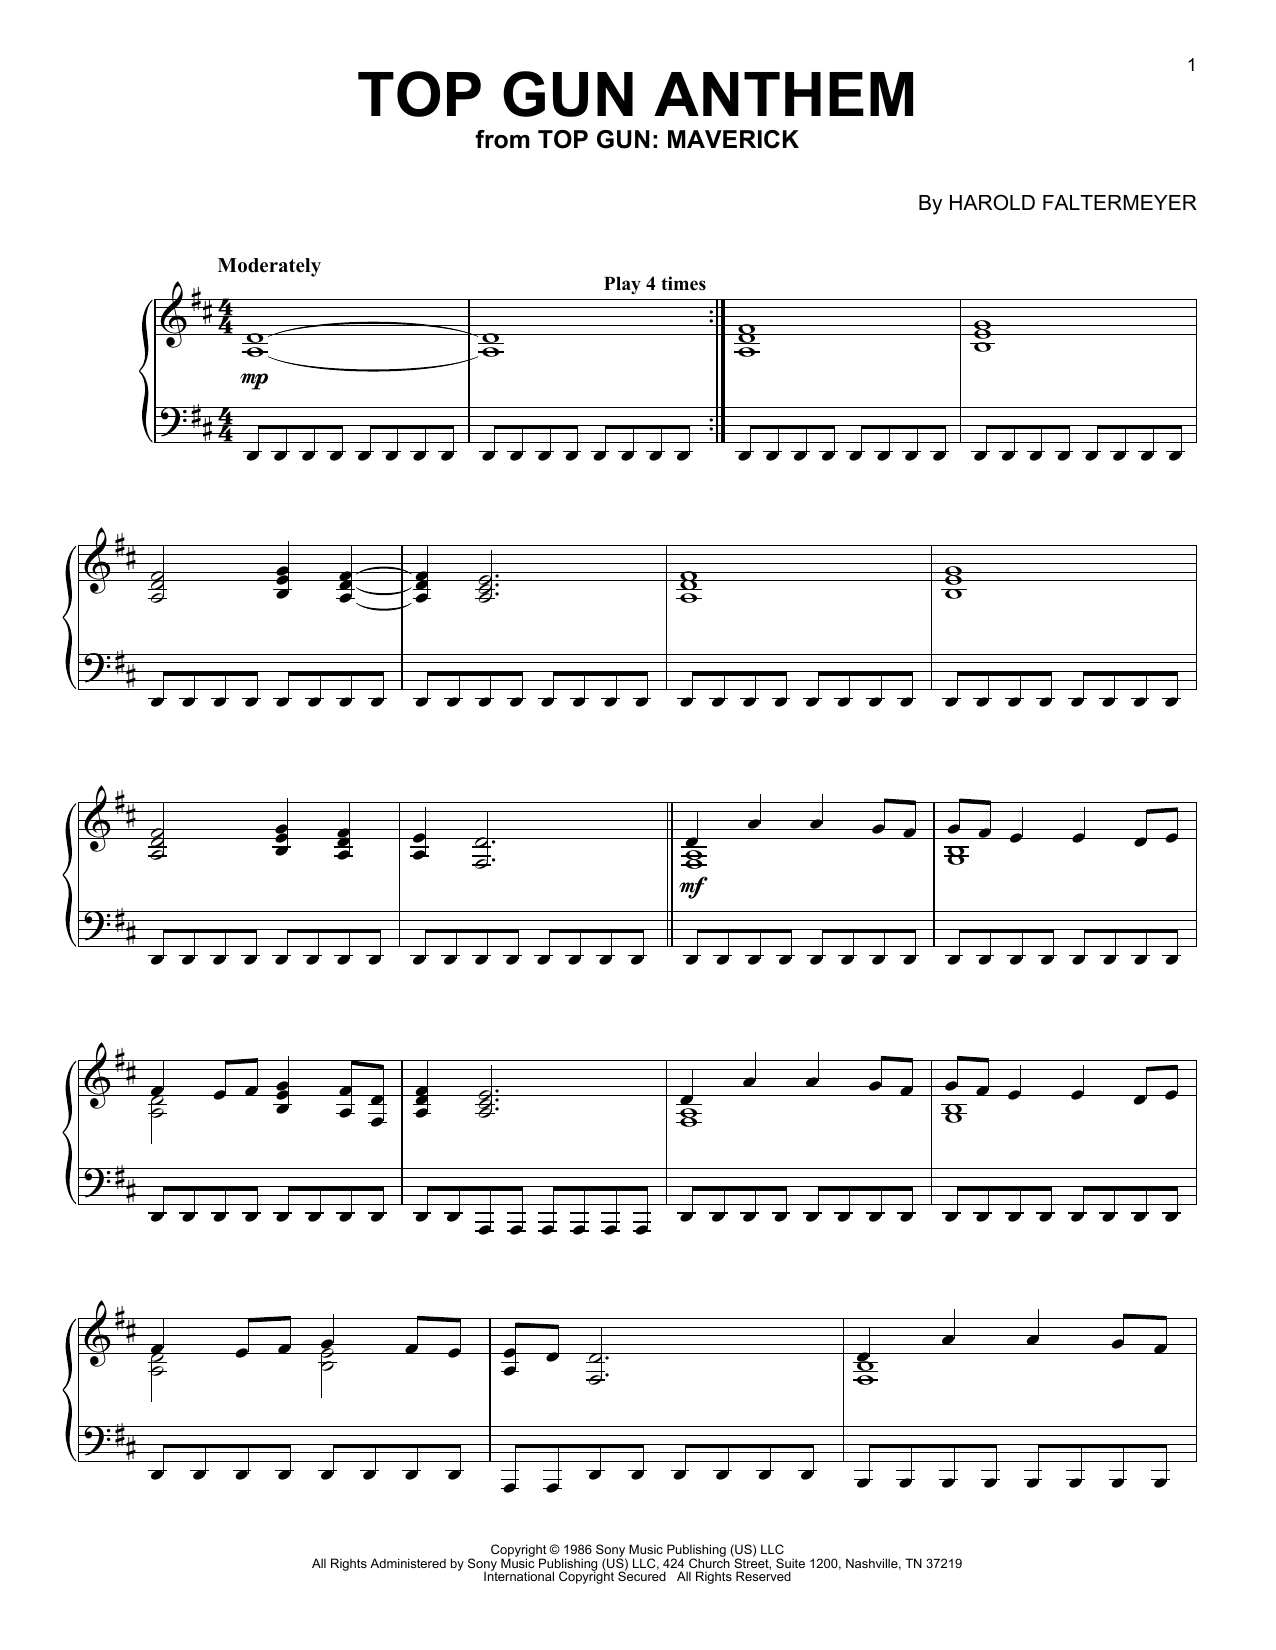 Harold Faltermeyer Top Gun Anthem (from Top Gun: Maverick) Sheet Music Notes & Chords for Piano Solo - Download or Print PDF